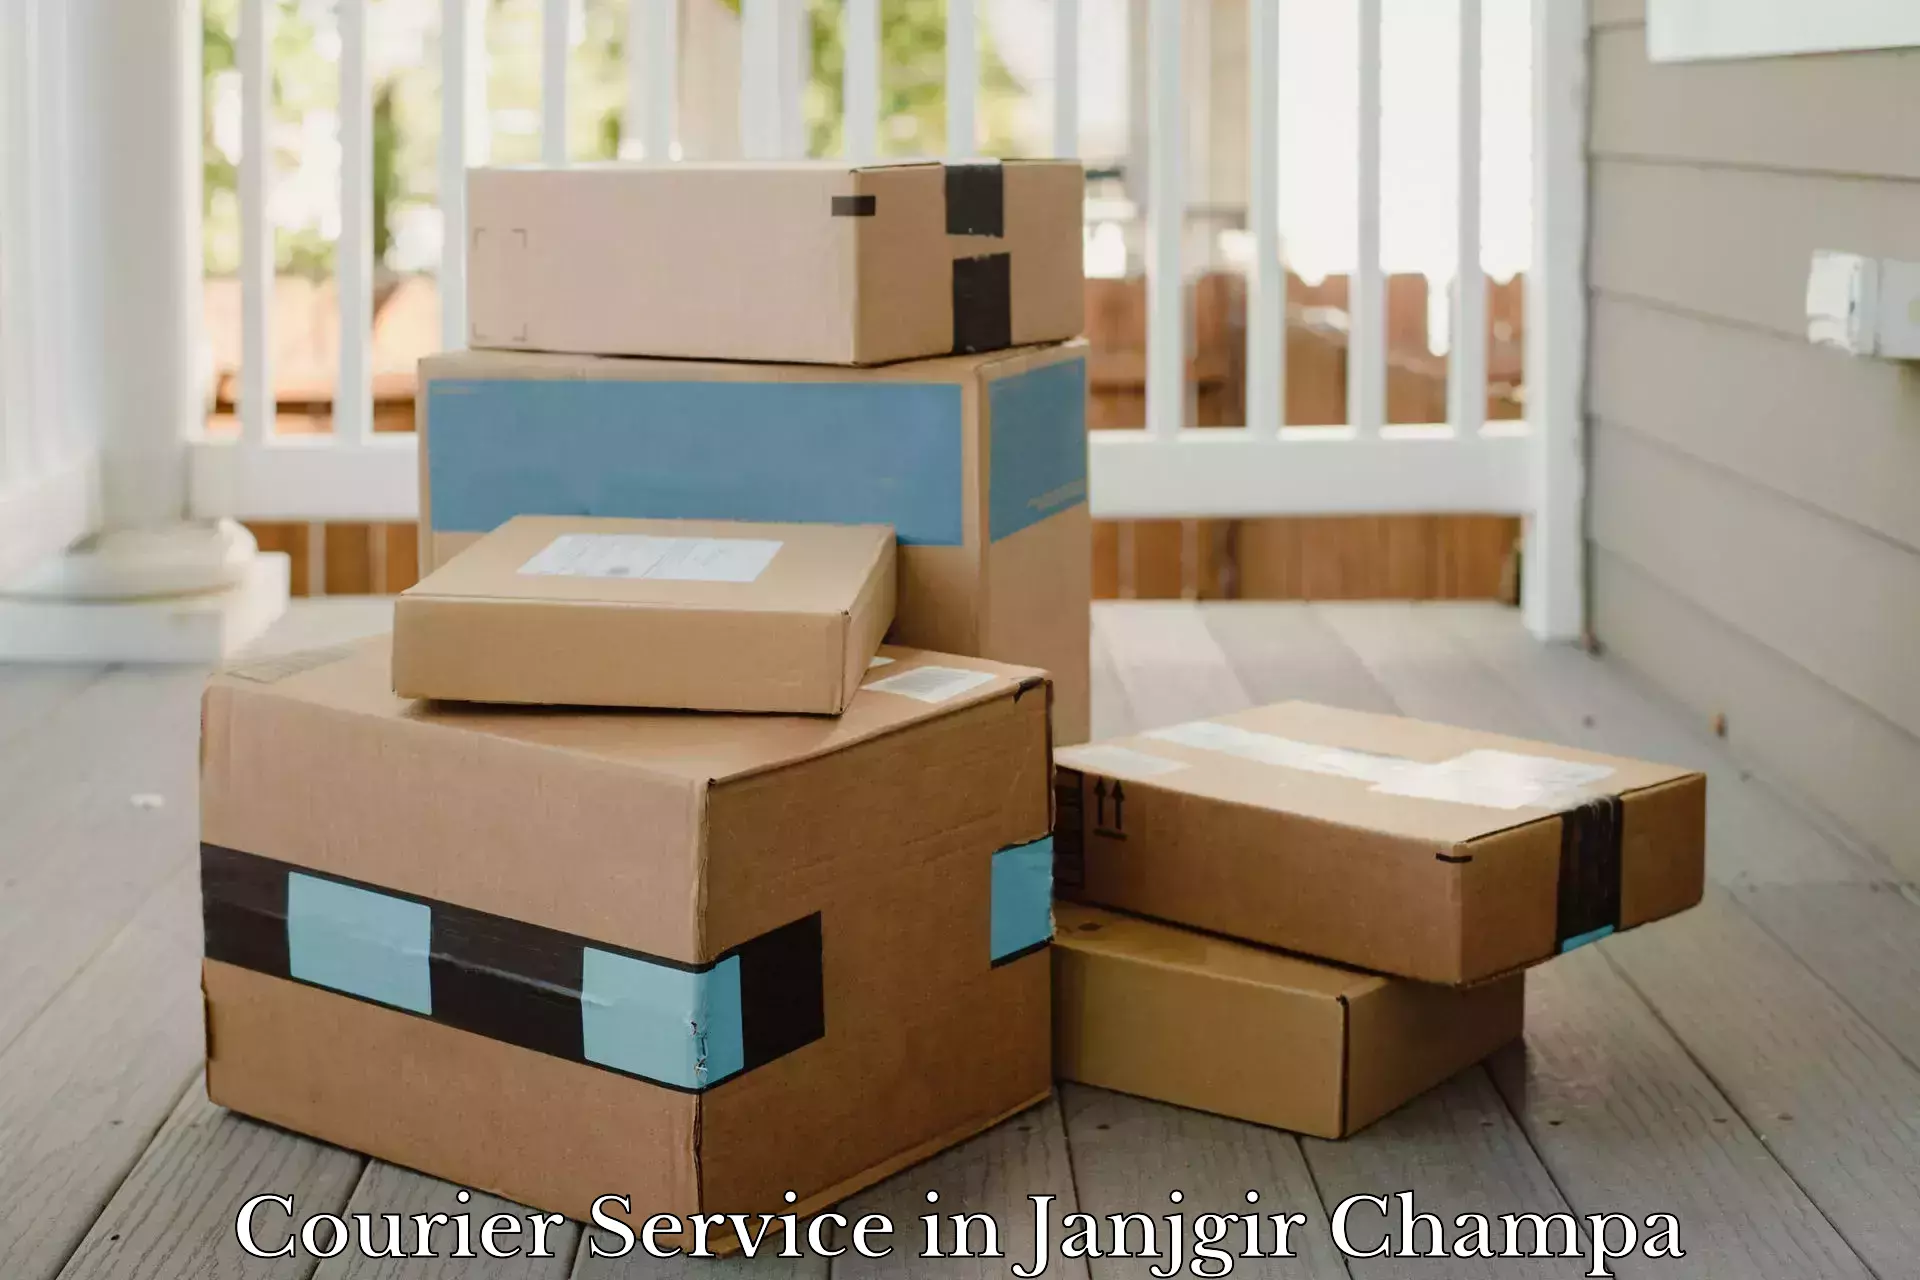 International parcel service in Janjgir Champa